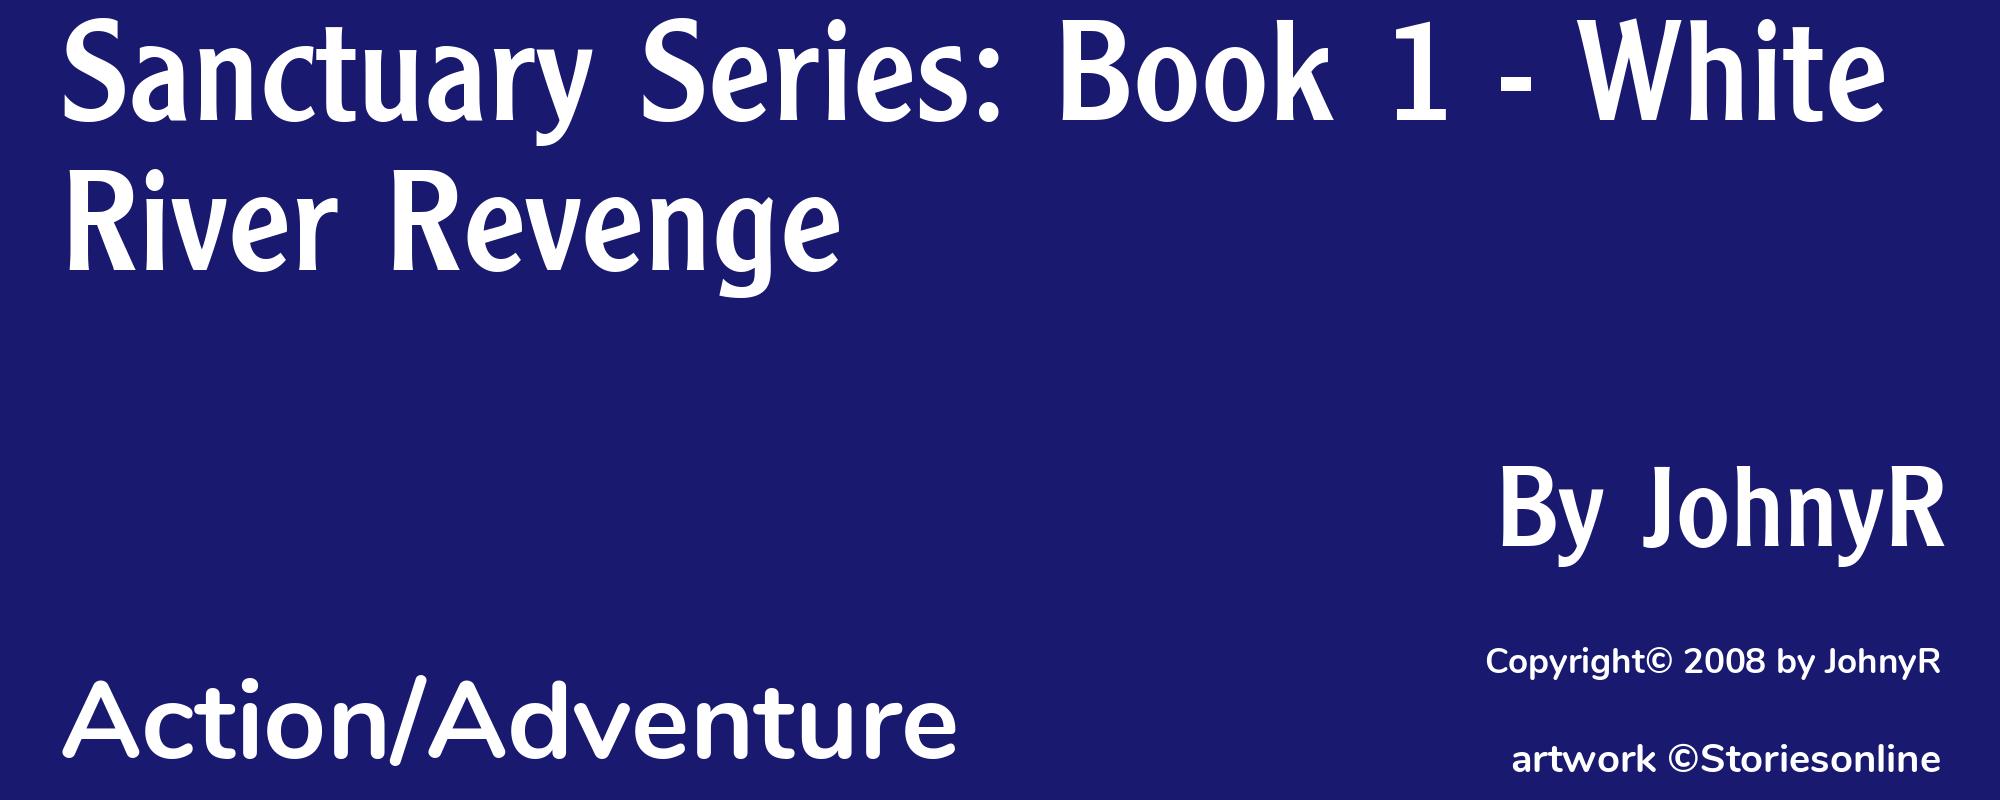 Sanctuary Series: Book 1 - White River Revenge - Cover